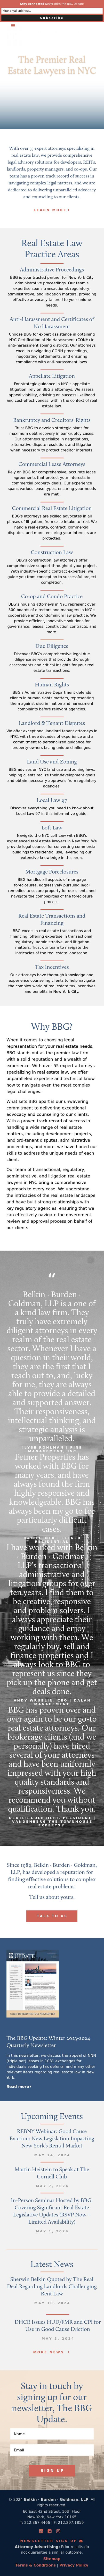 Belkin Burden Wenig & Goldman, LLP - Westport CT Lawyers